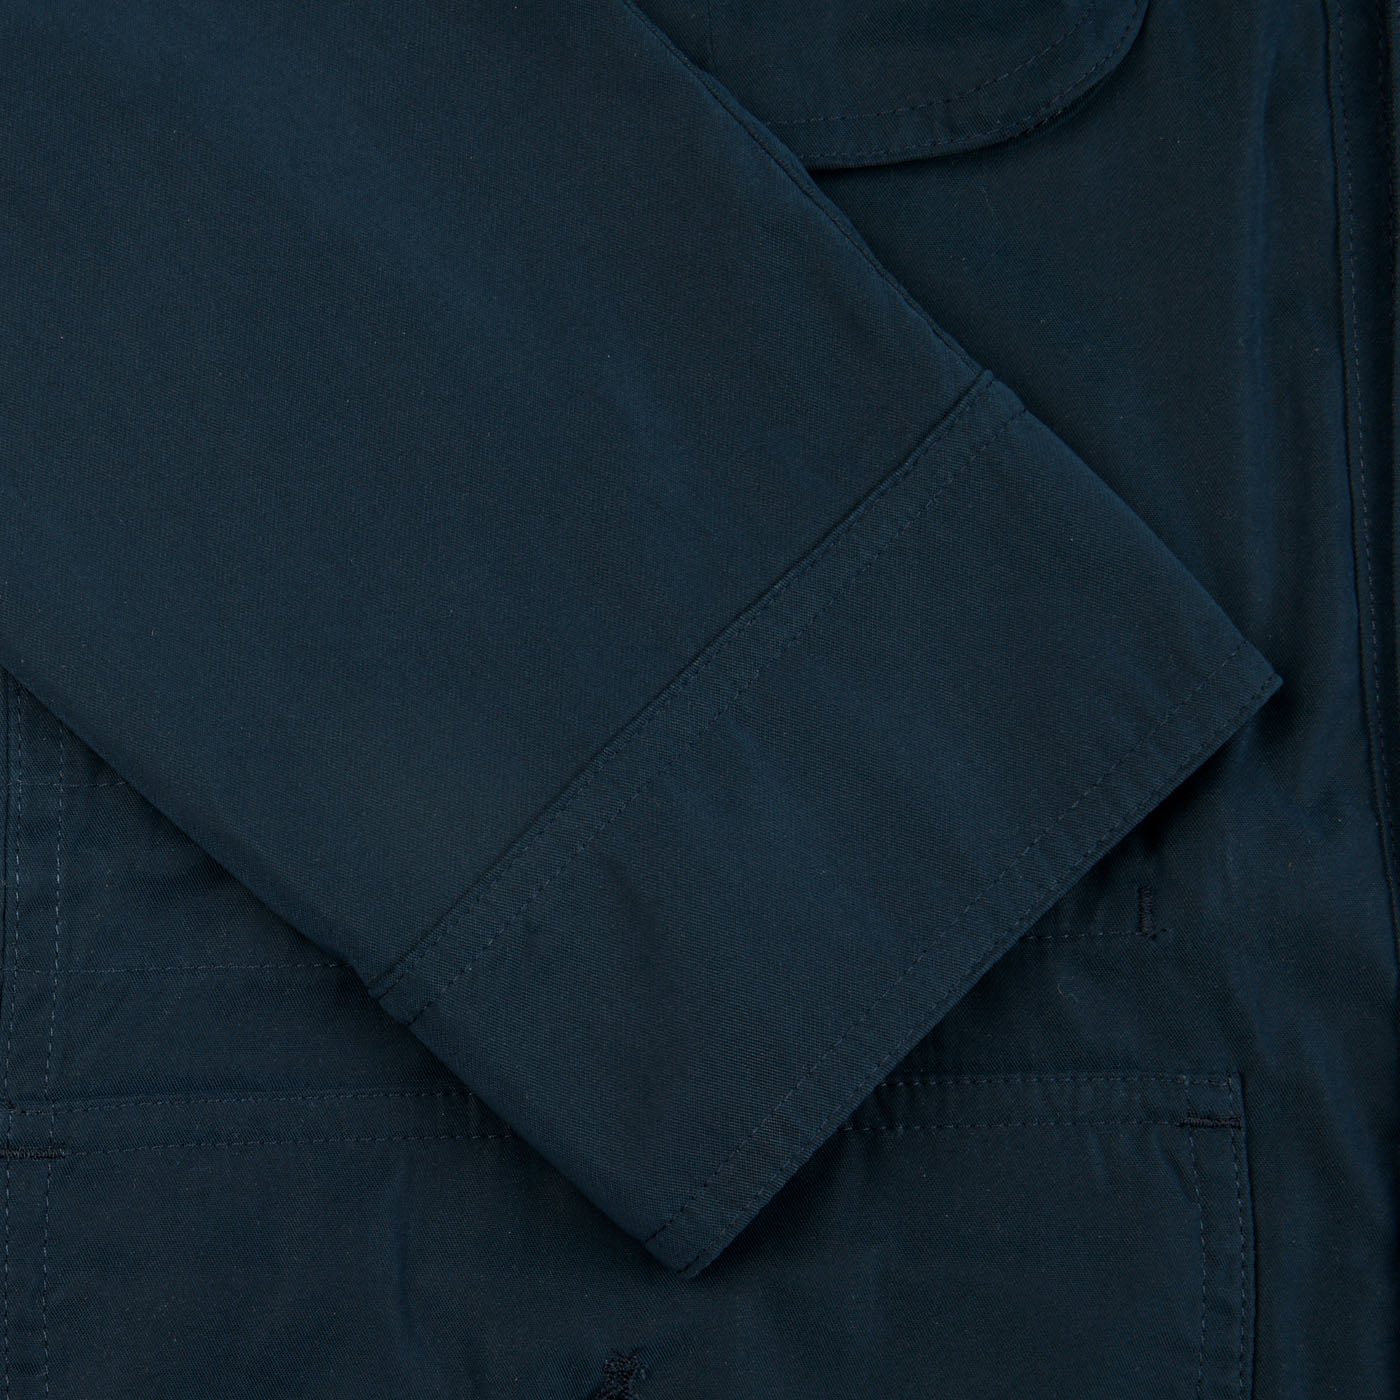 A close up image of a Manto Navy Blue Ultrafine Microfiber Safari Jacket.